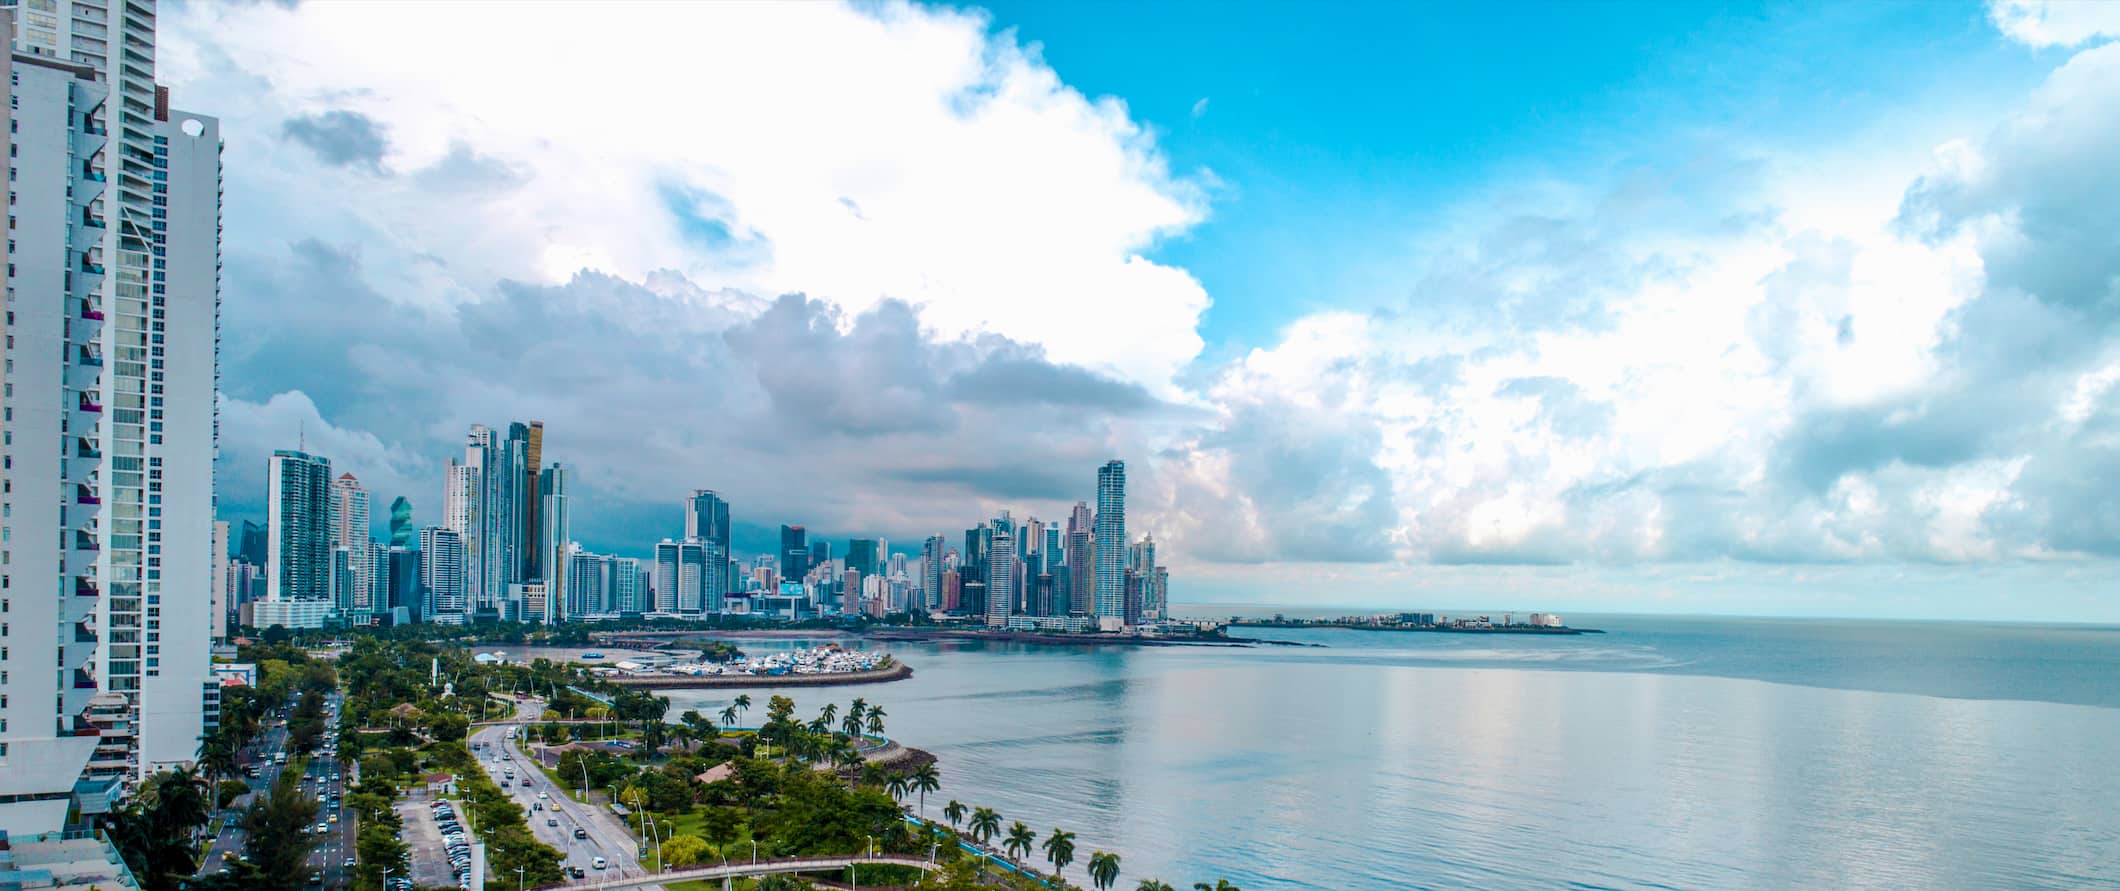 traffic and city skyline views in Panama City